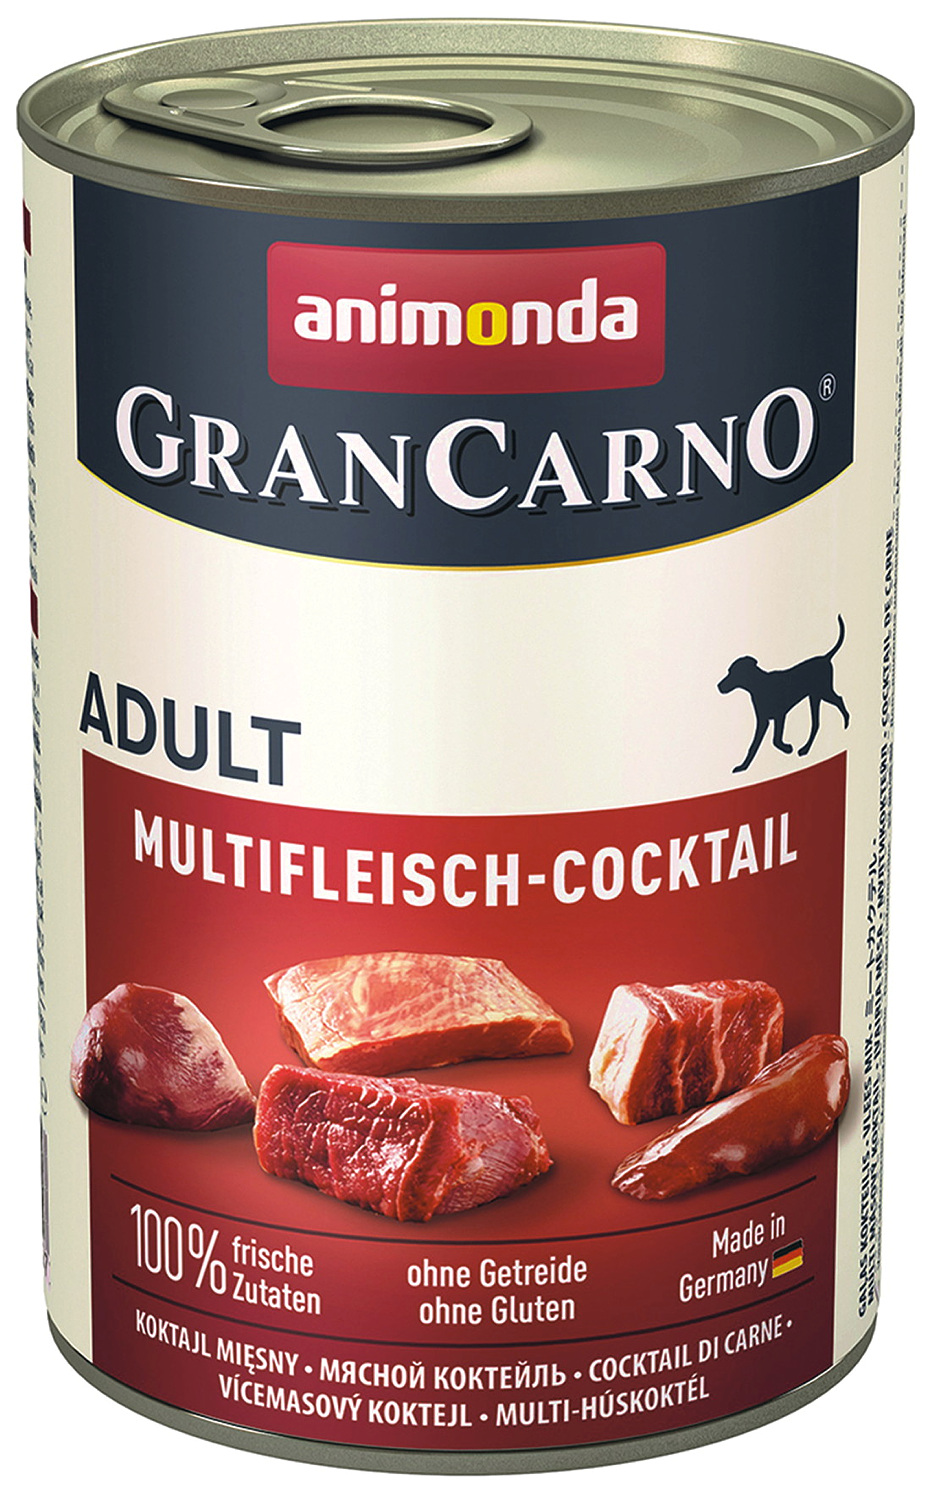 animonda Gran Carno - Adult Multi-Fleischcocktail, 400 g